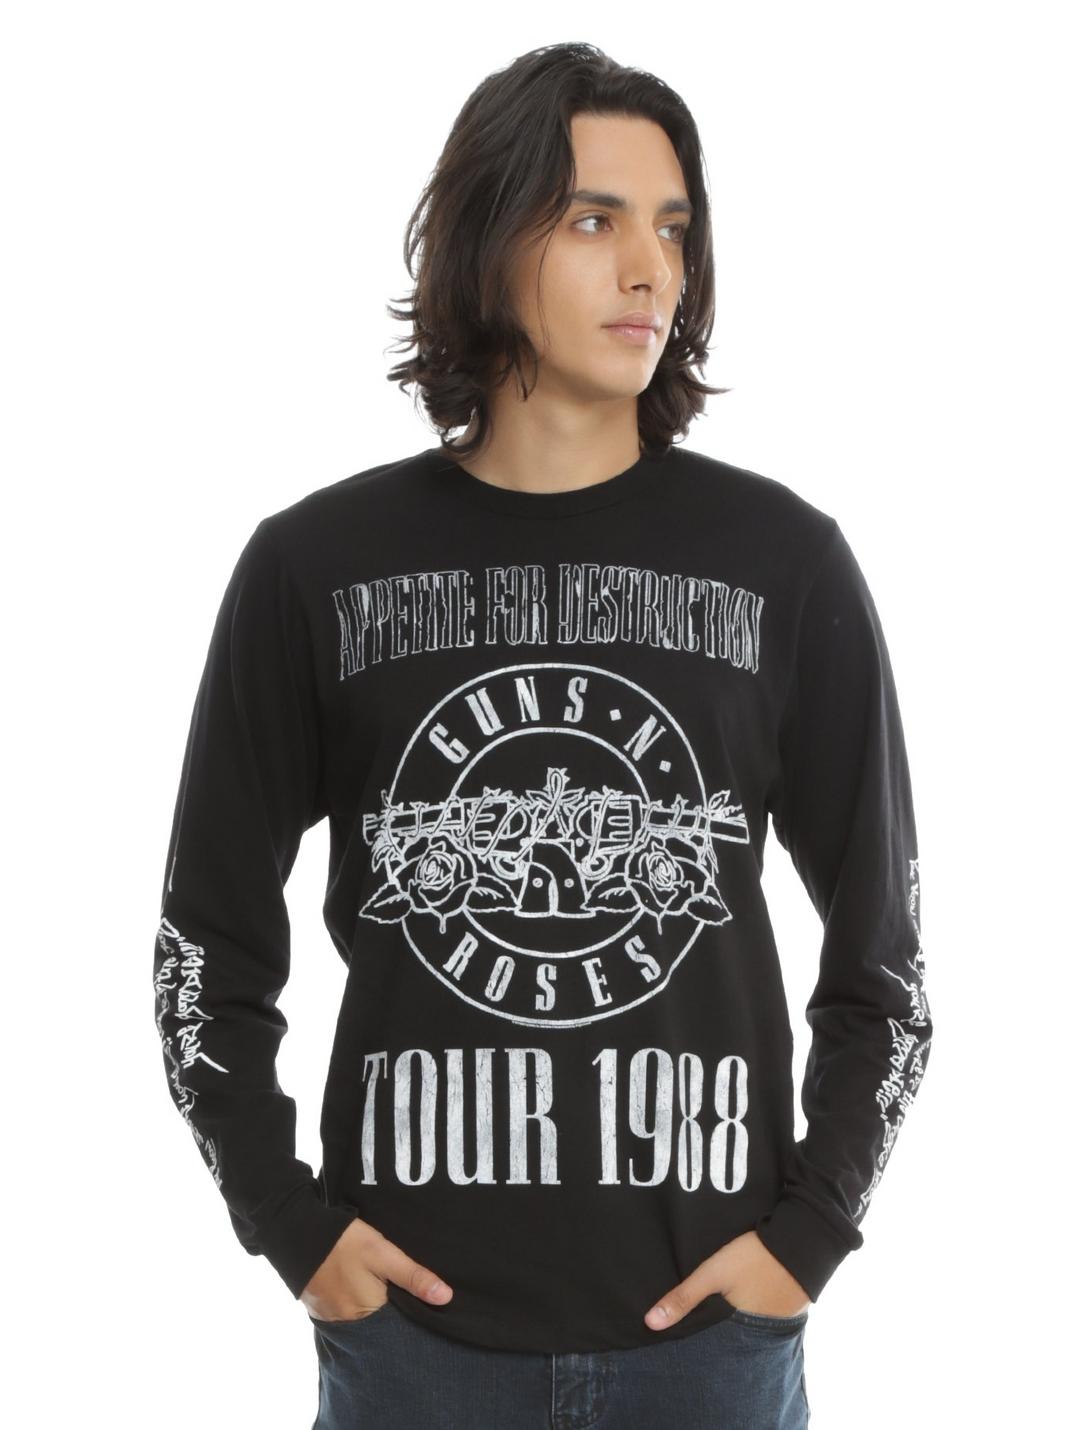 Guns N' Roses Appetite For Destruction 1988 Tour T-Shirt, BLACK, hi-res